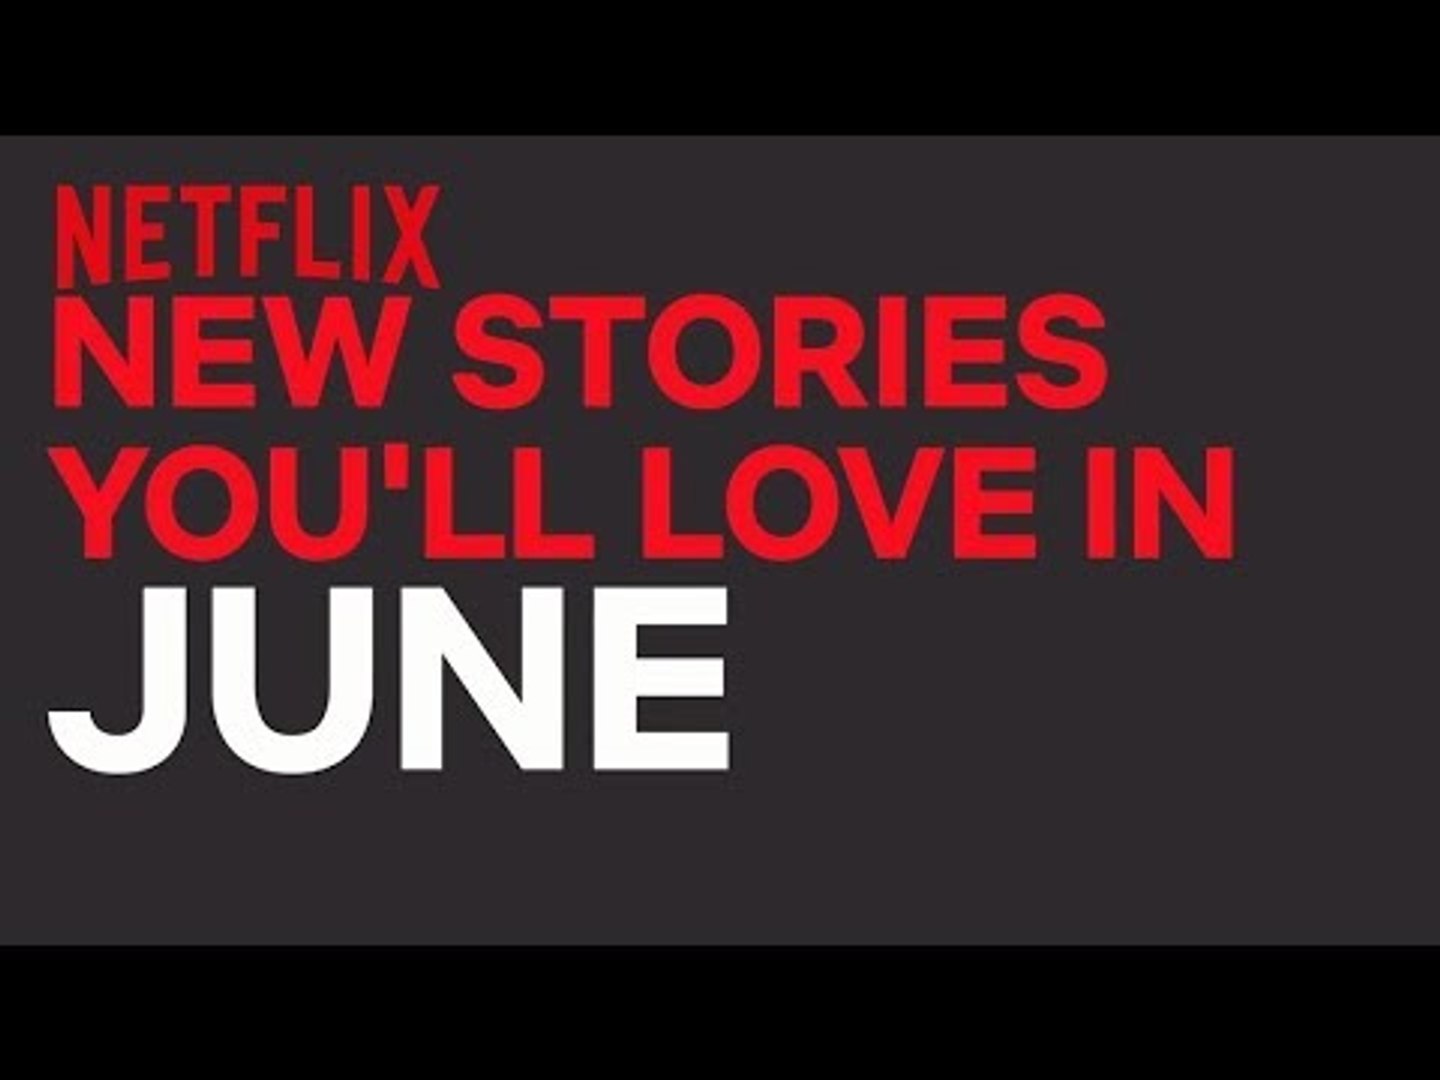 New to Netflix UK | June | Netflix